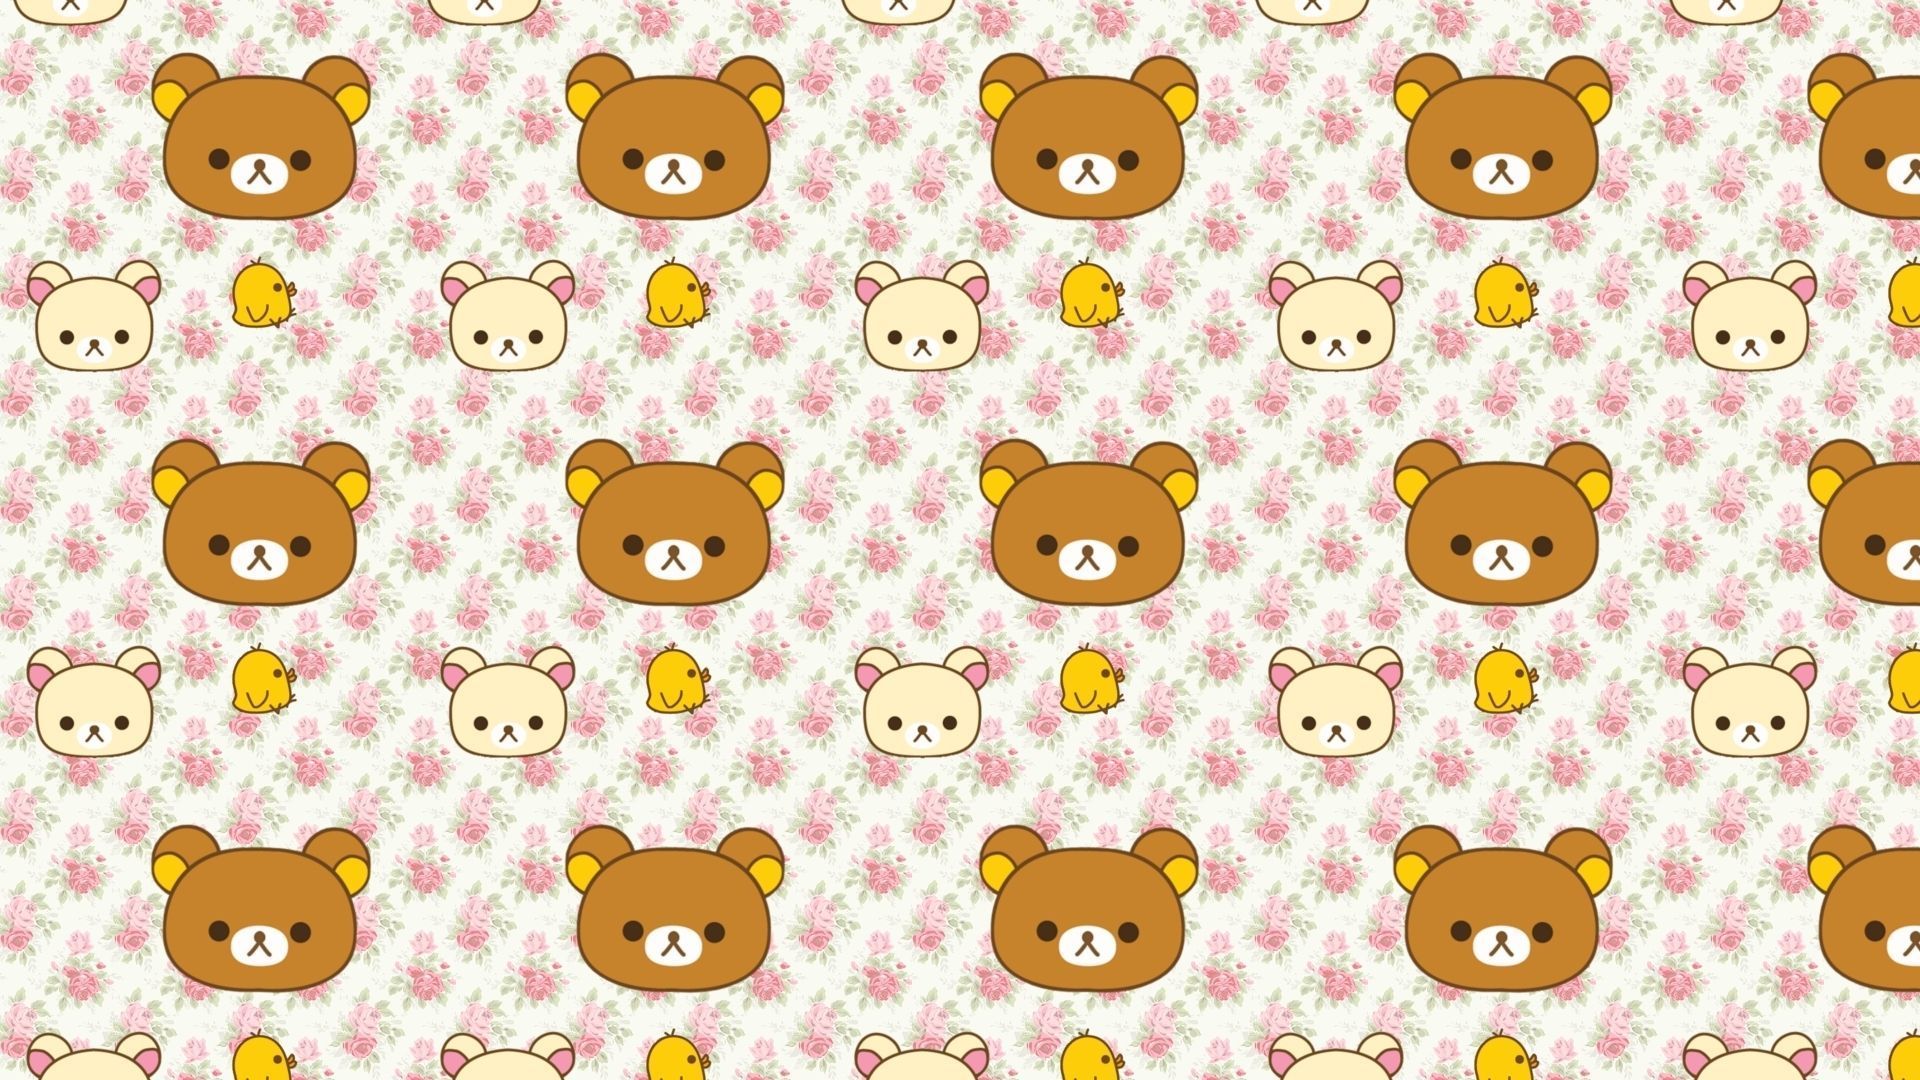 Kawaii Teddy Bear In Blur Background HD Kawaii Wallpapers  HD Wallpapers   ID 81826